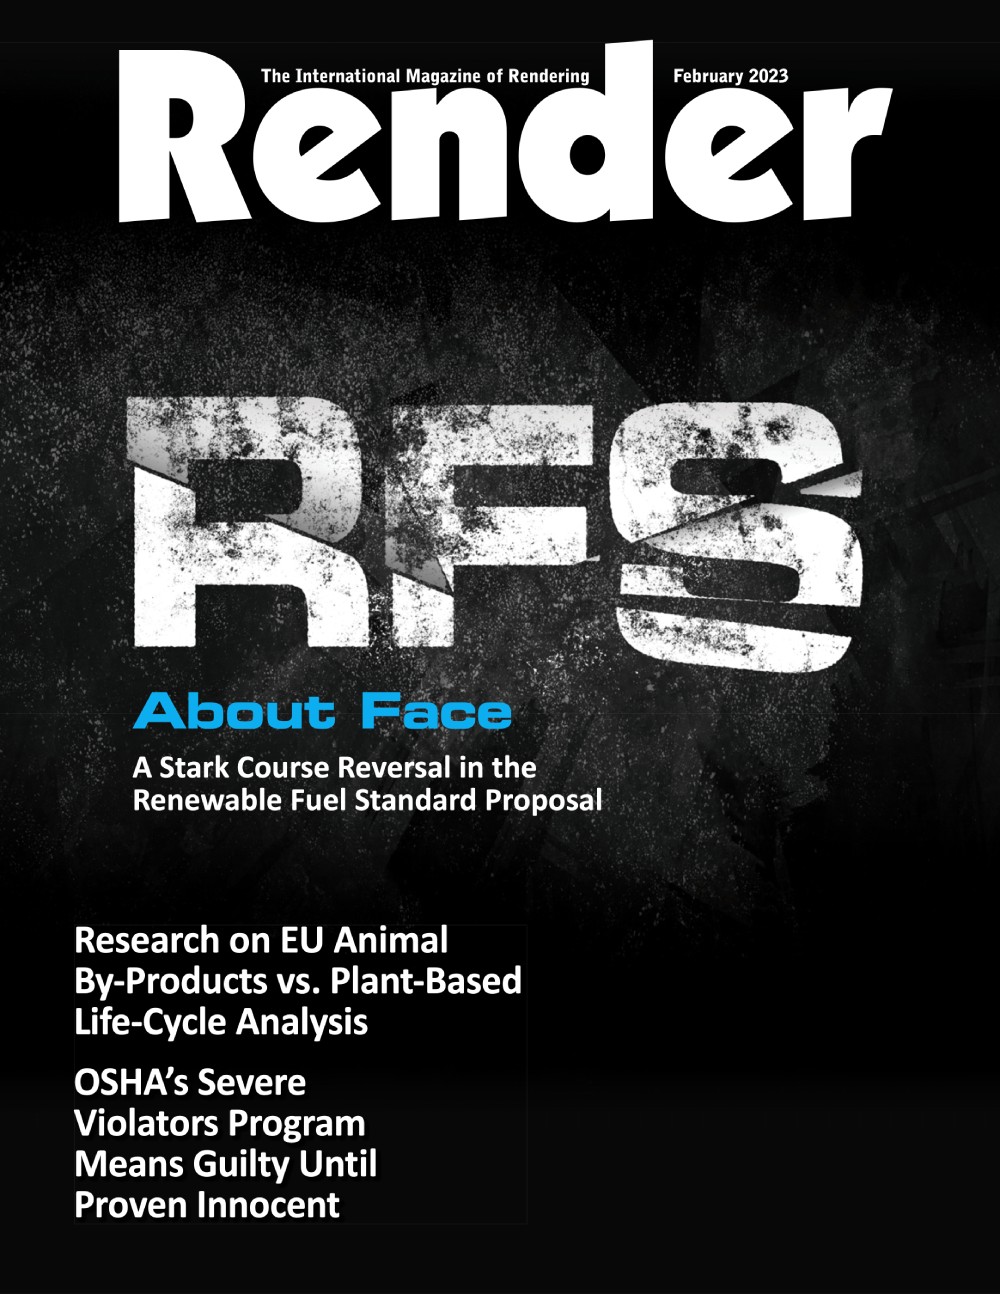 Render Magazine February 2023 cover